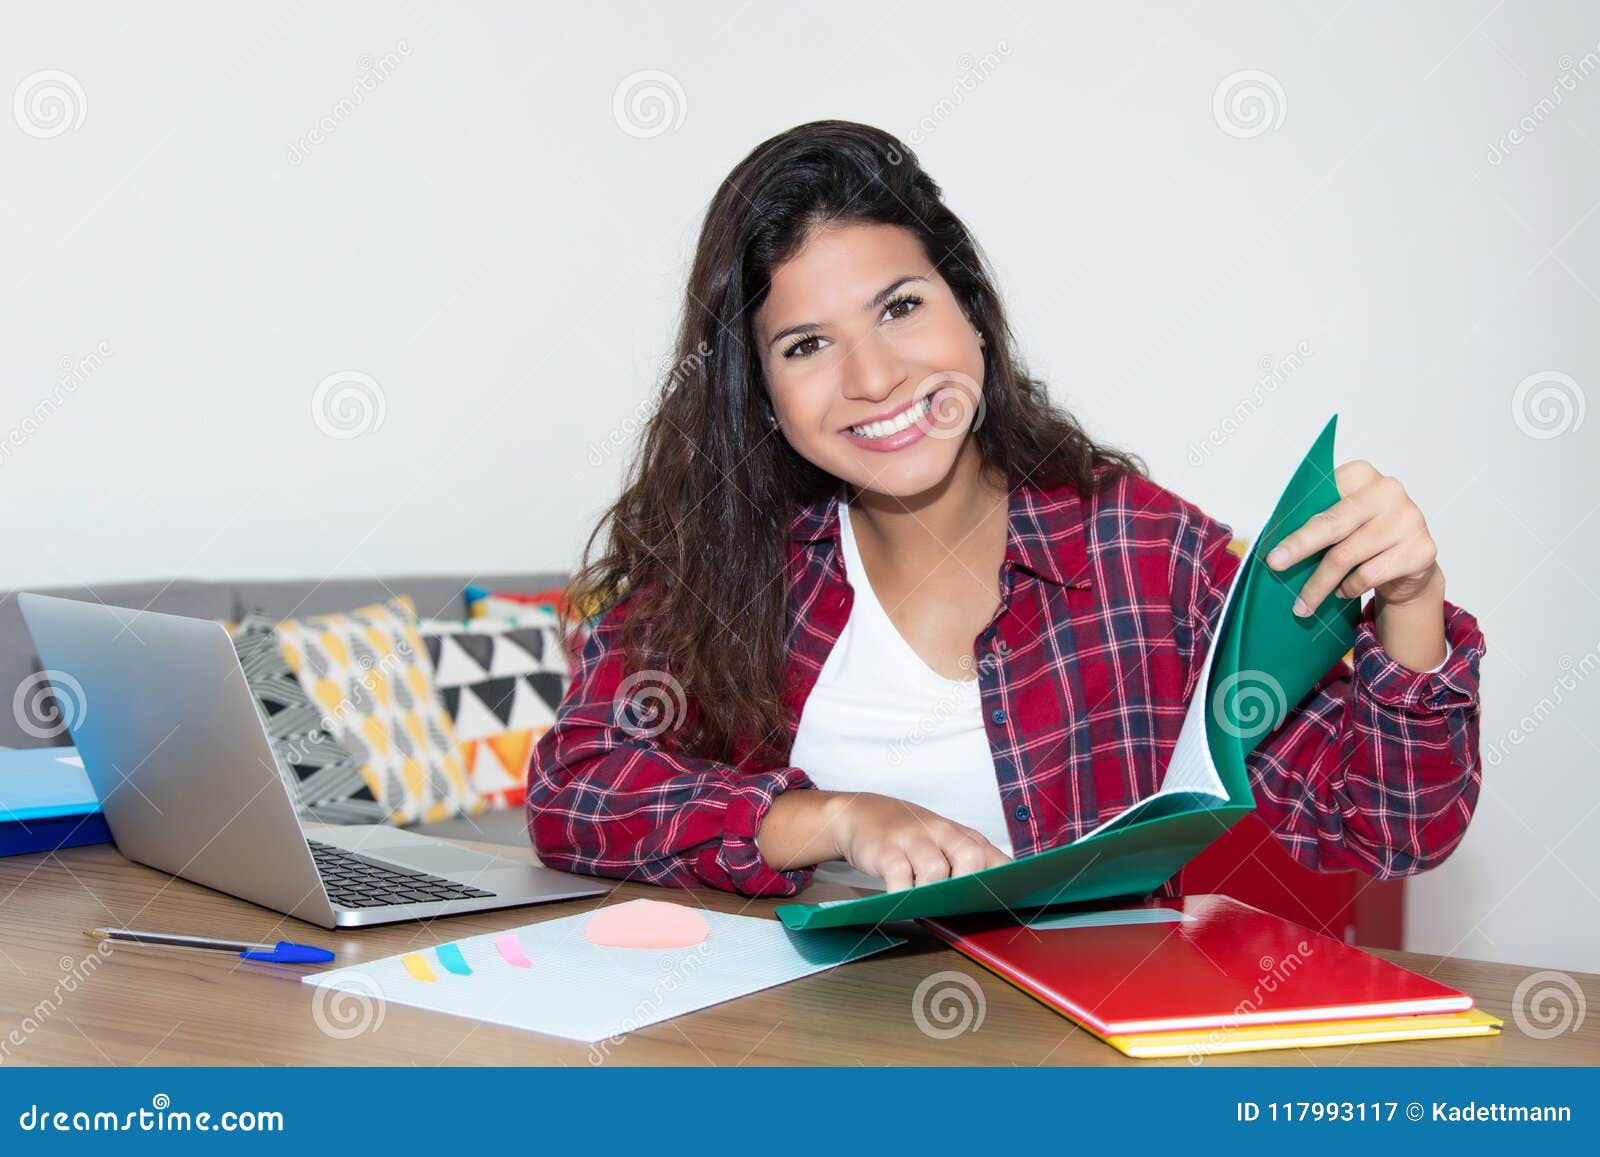 Cute Female Student Preparing For Exam Stock Image Image Of Desk